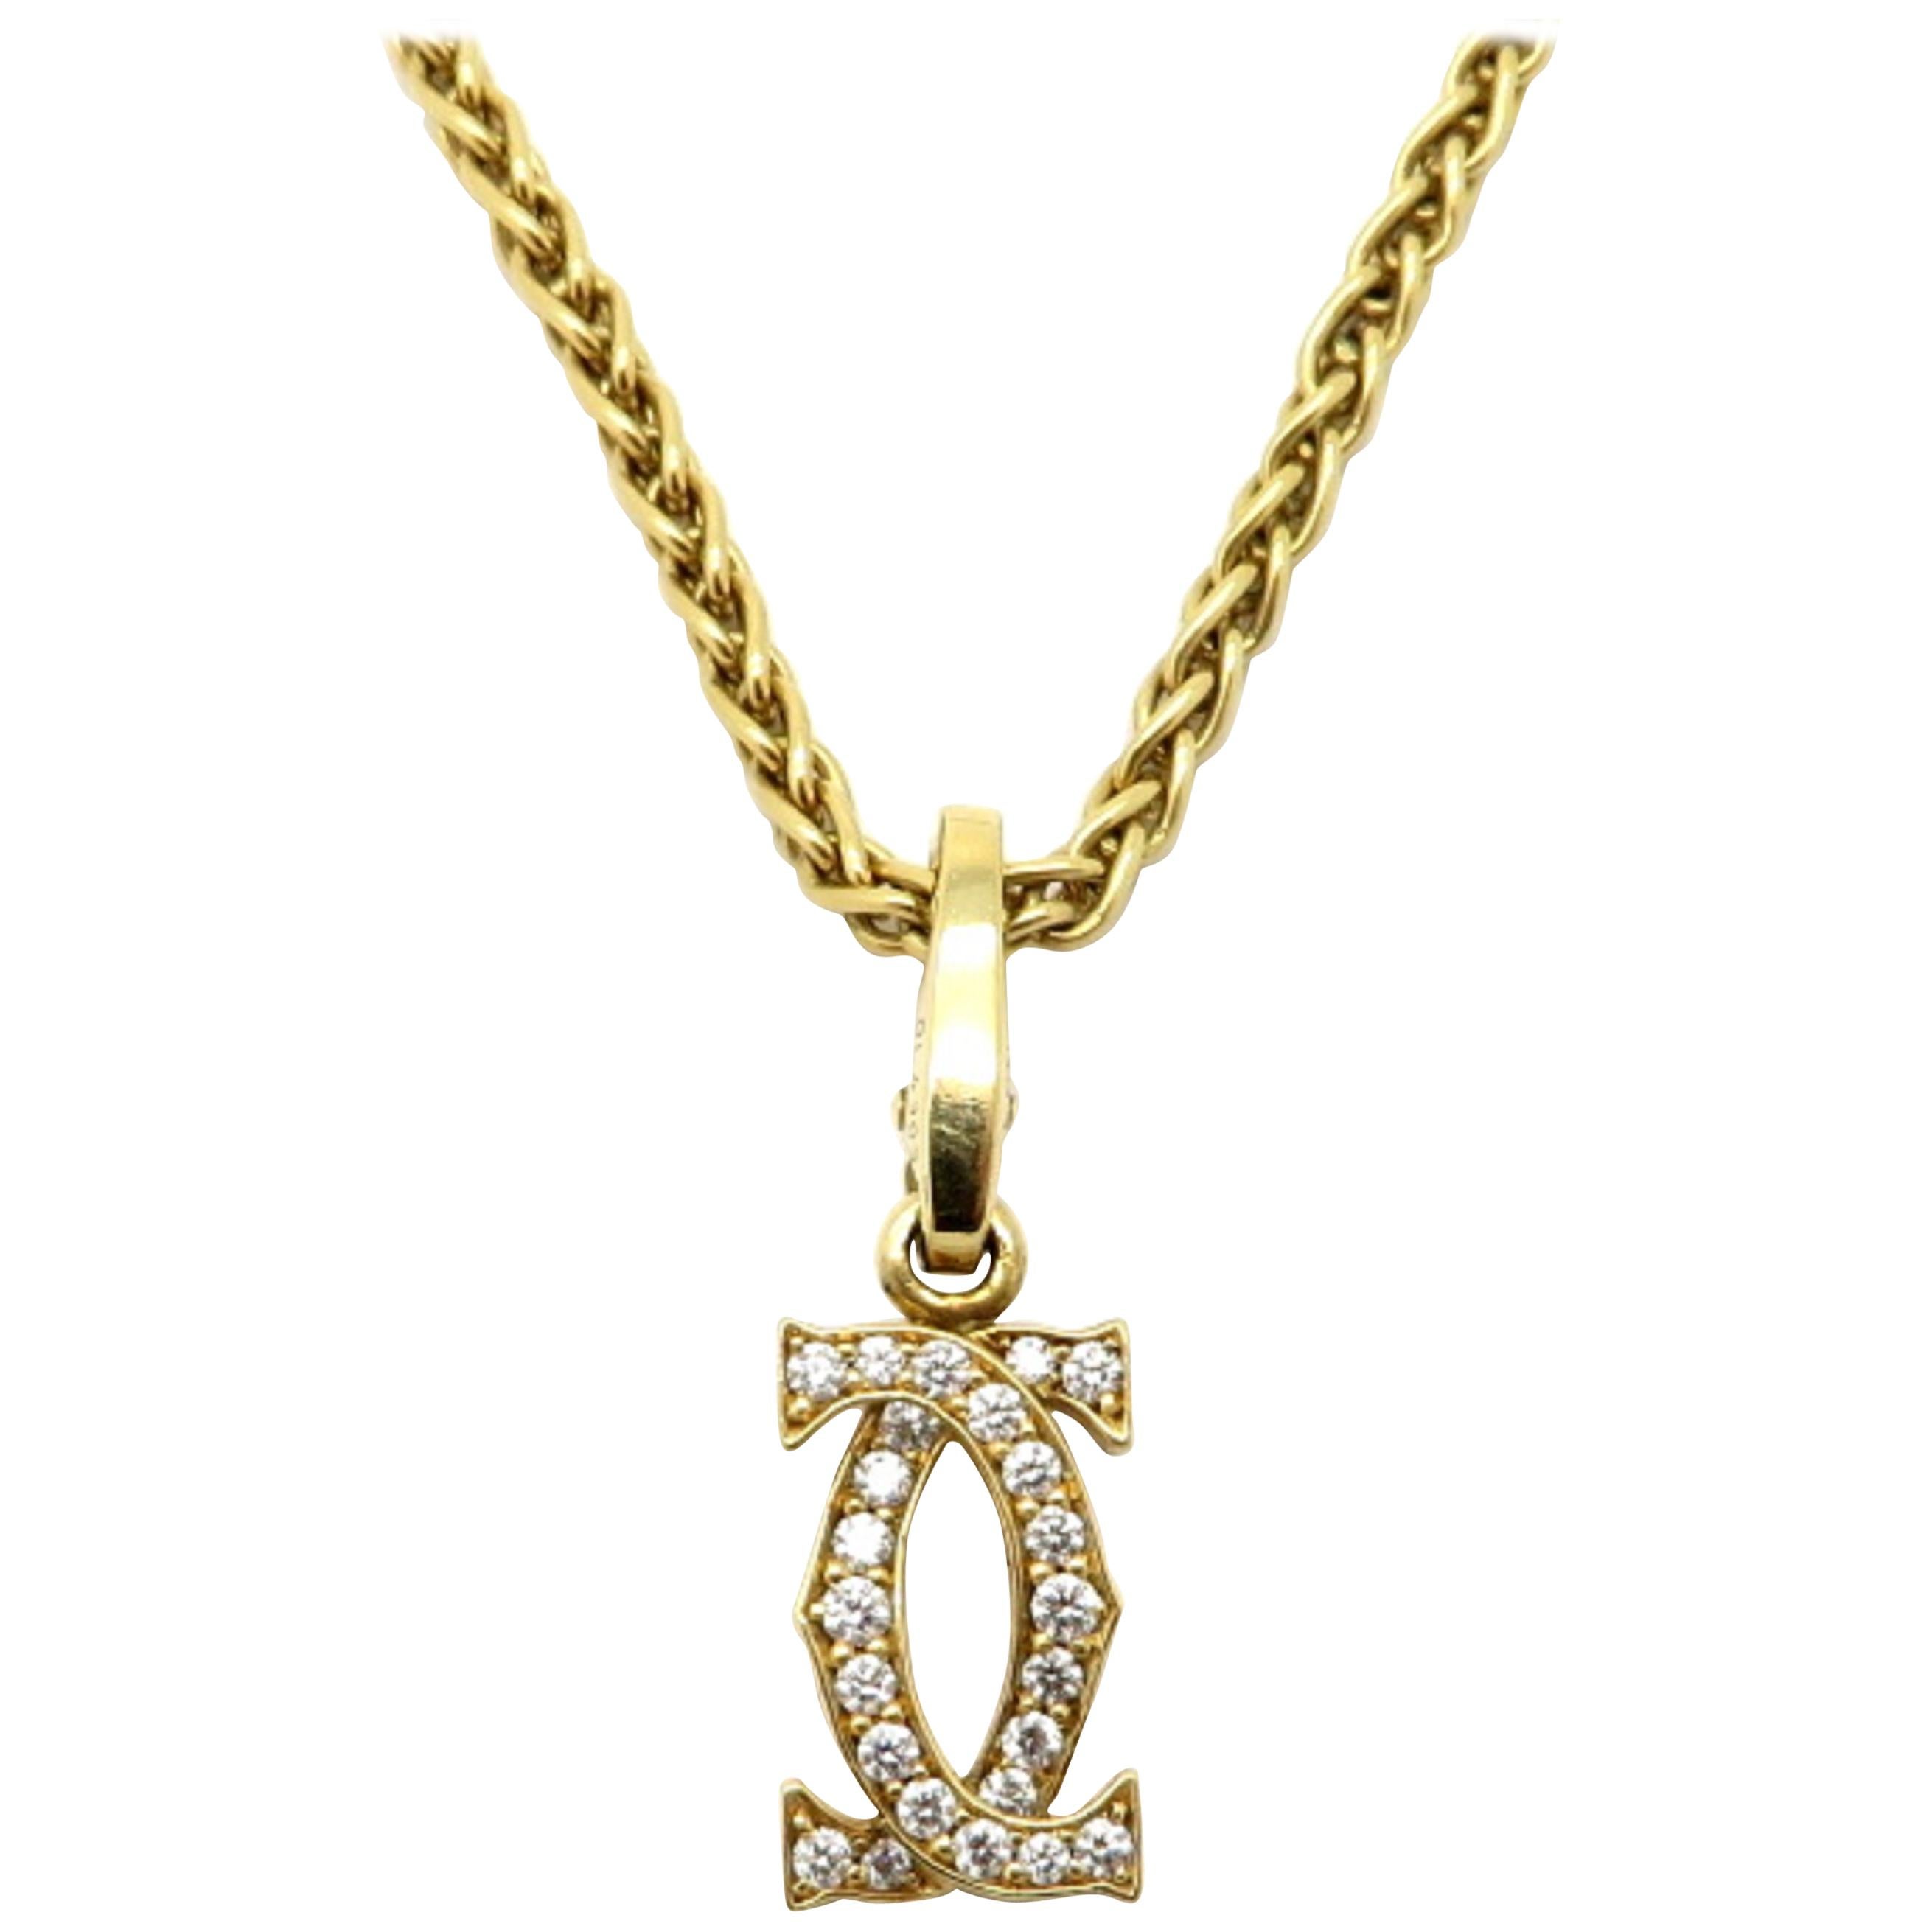 Designer 18 Karat Yellow Gold Double C Cartier Charm Necklace